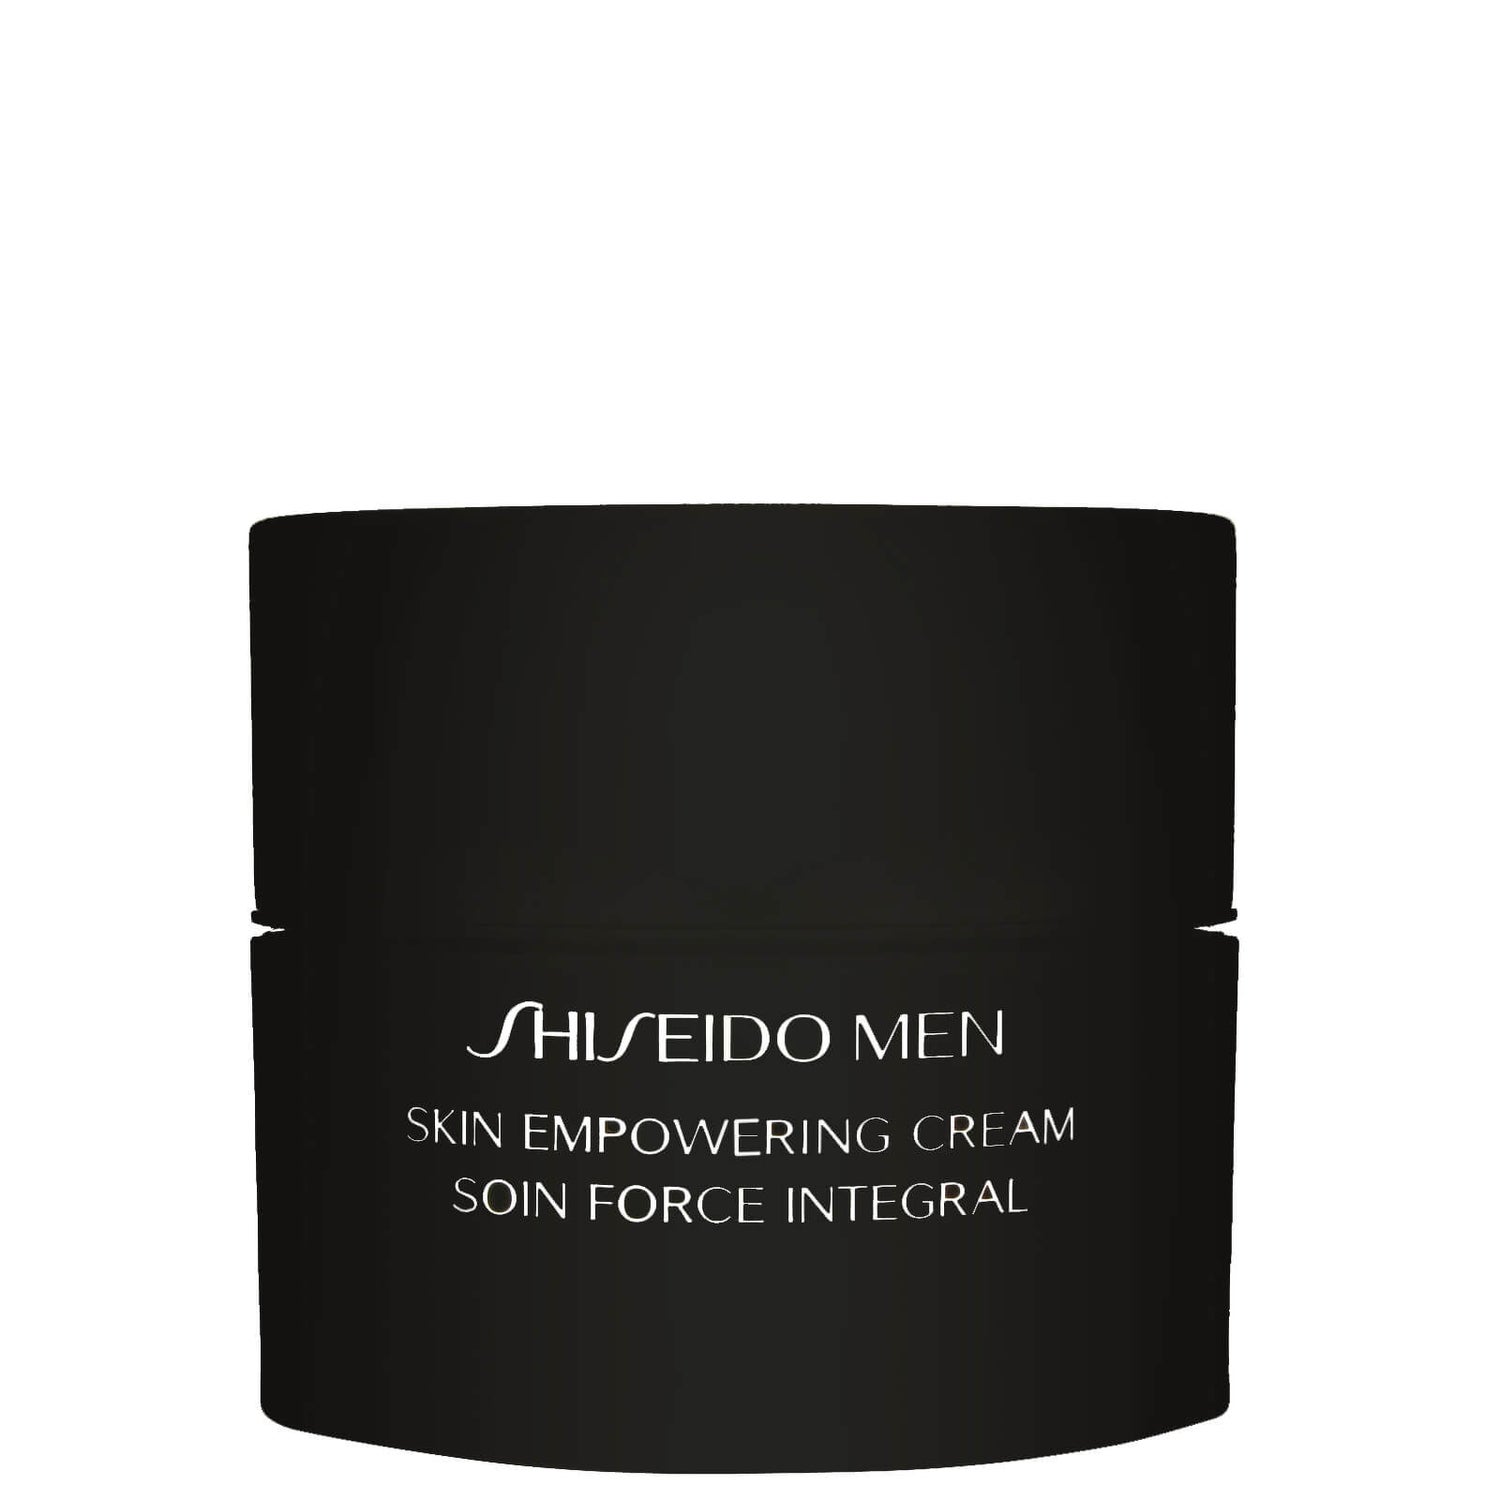 oz. - / Shiseido 1.7 Empowering 50ml Cream allbeauty Skin Men